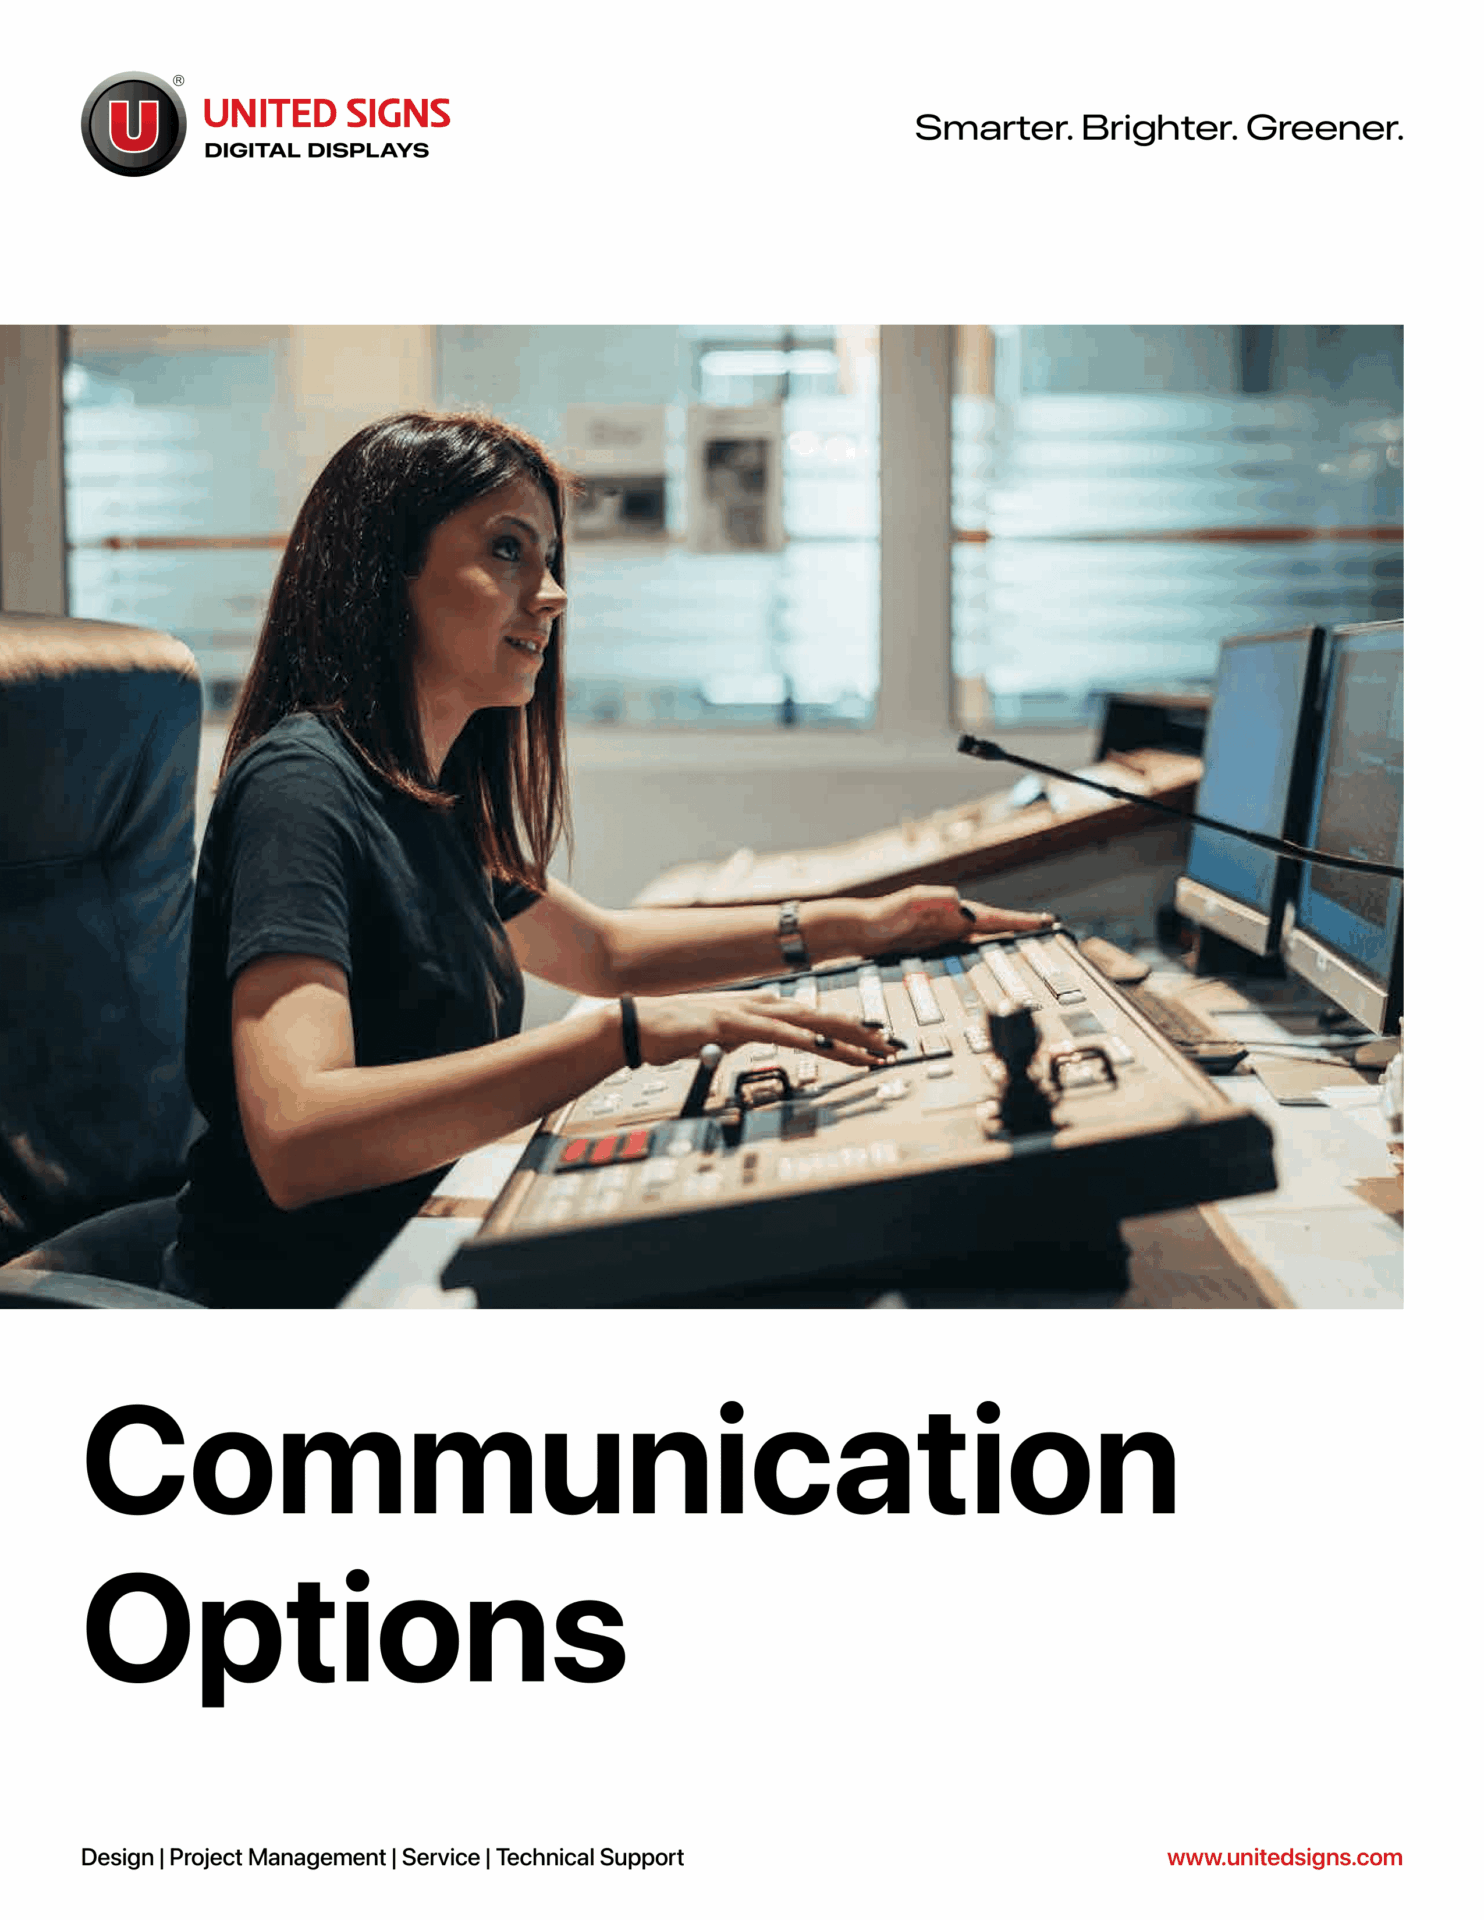 Communication Options